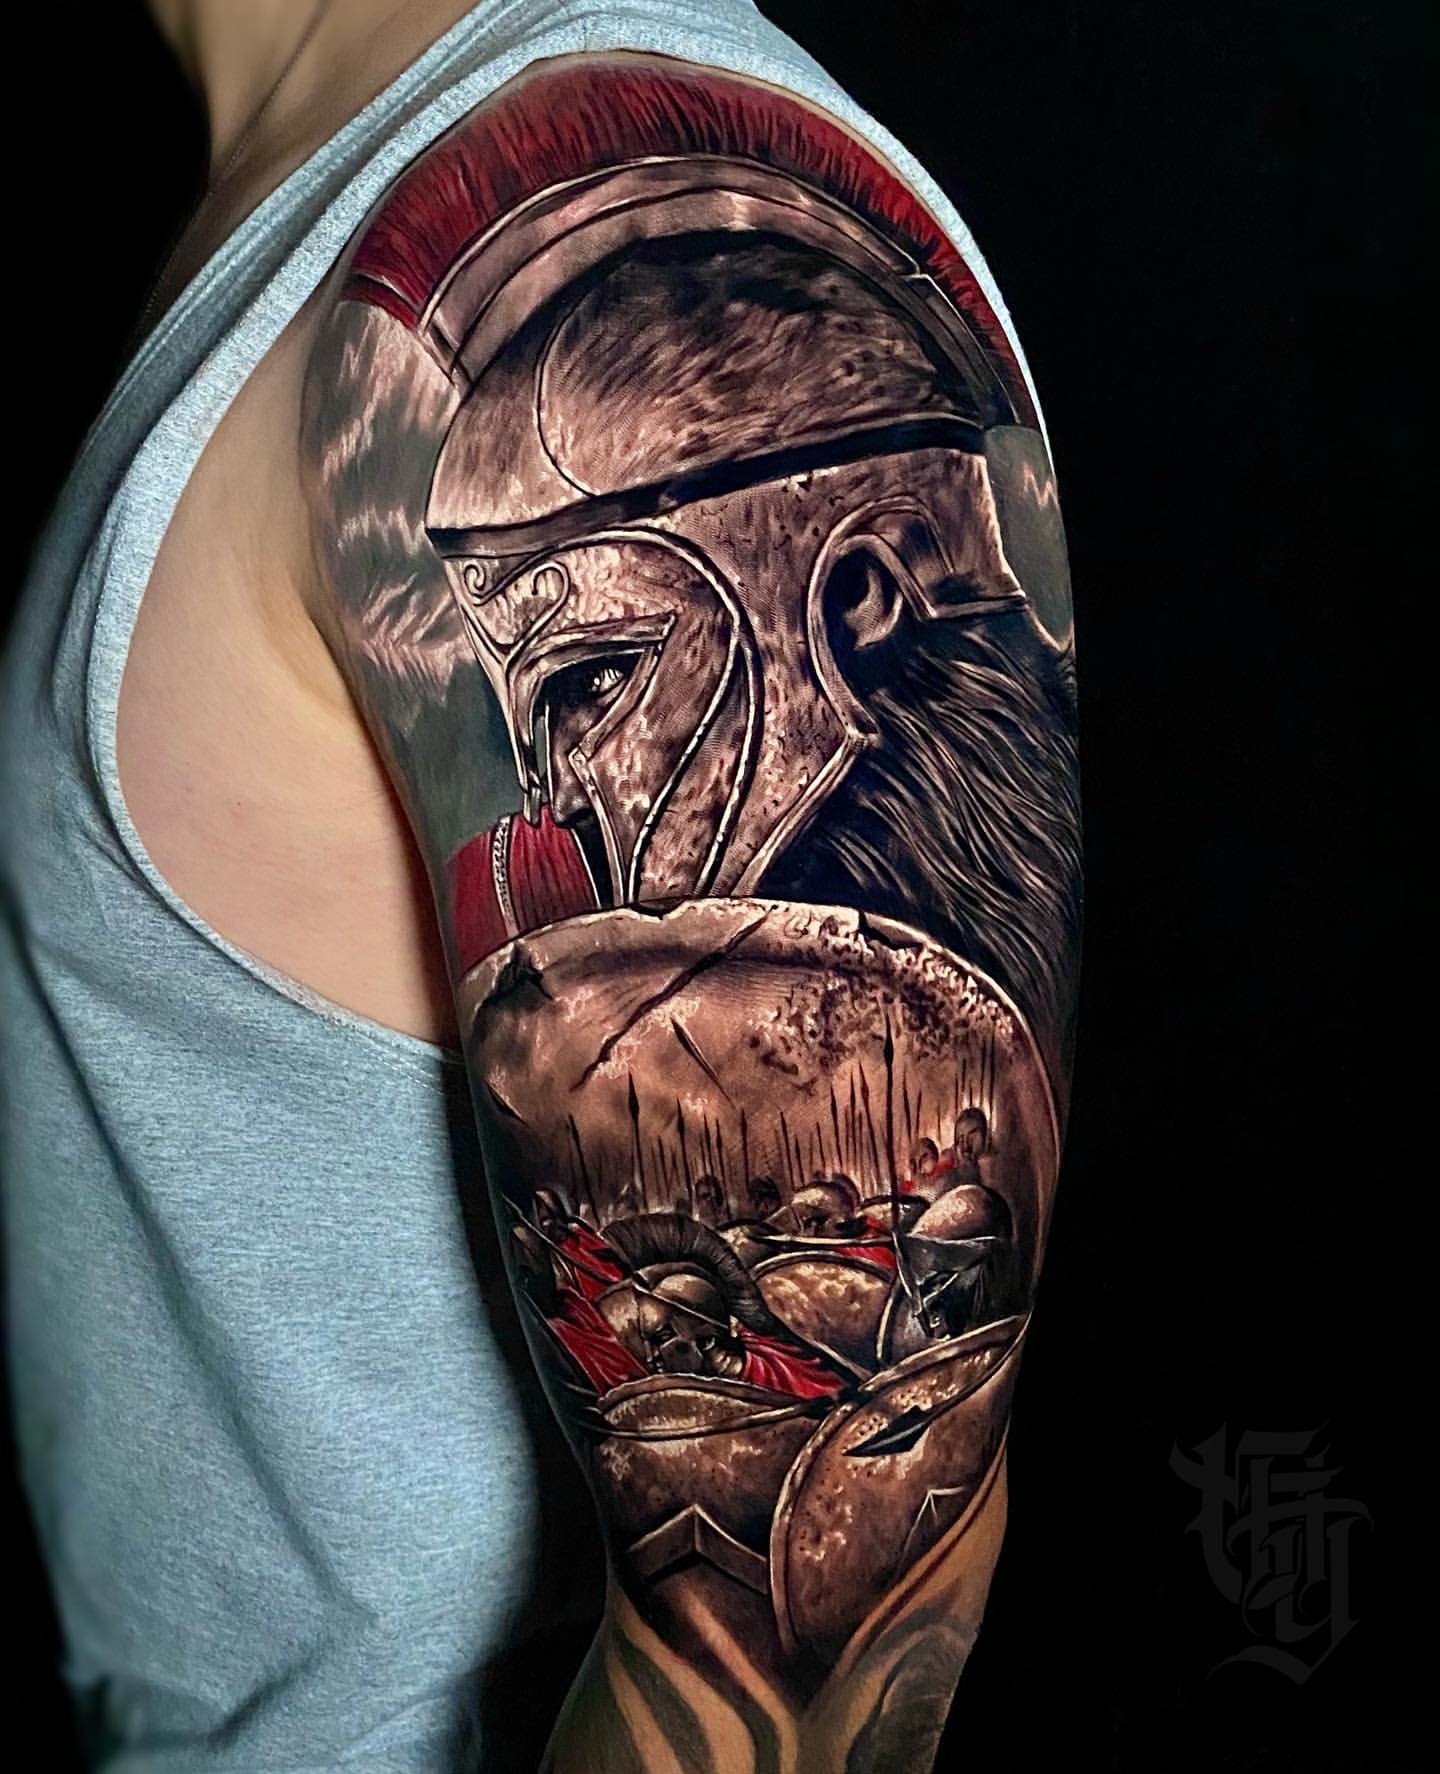 Spartan Warrior Tattoo by Bokitattoo on DeviantArt